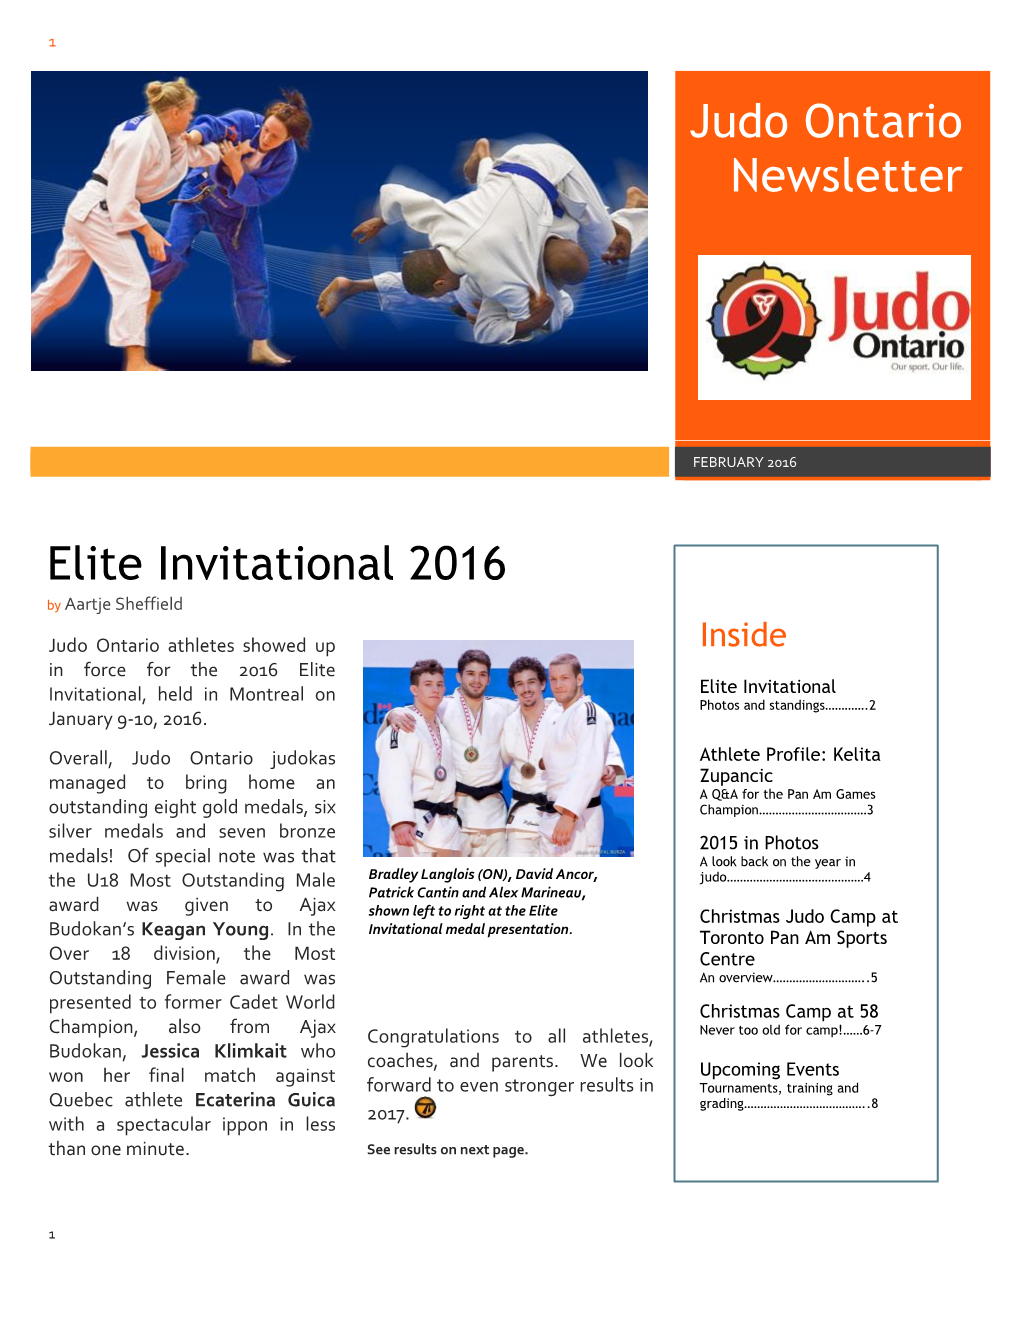 Judo Ontario Newsletter Elite Invitational 2016